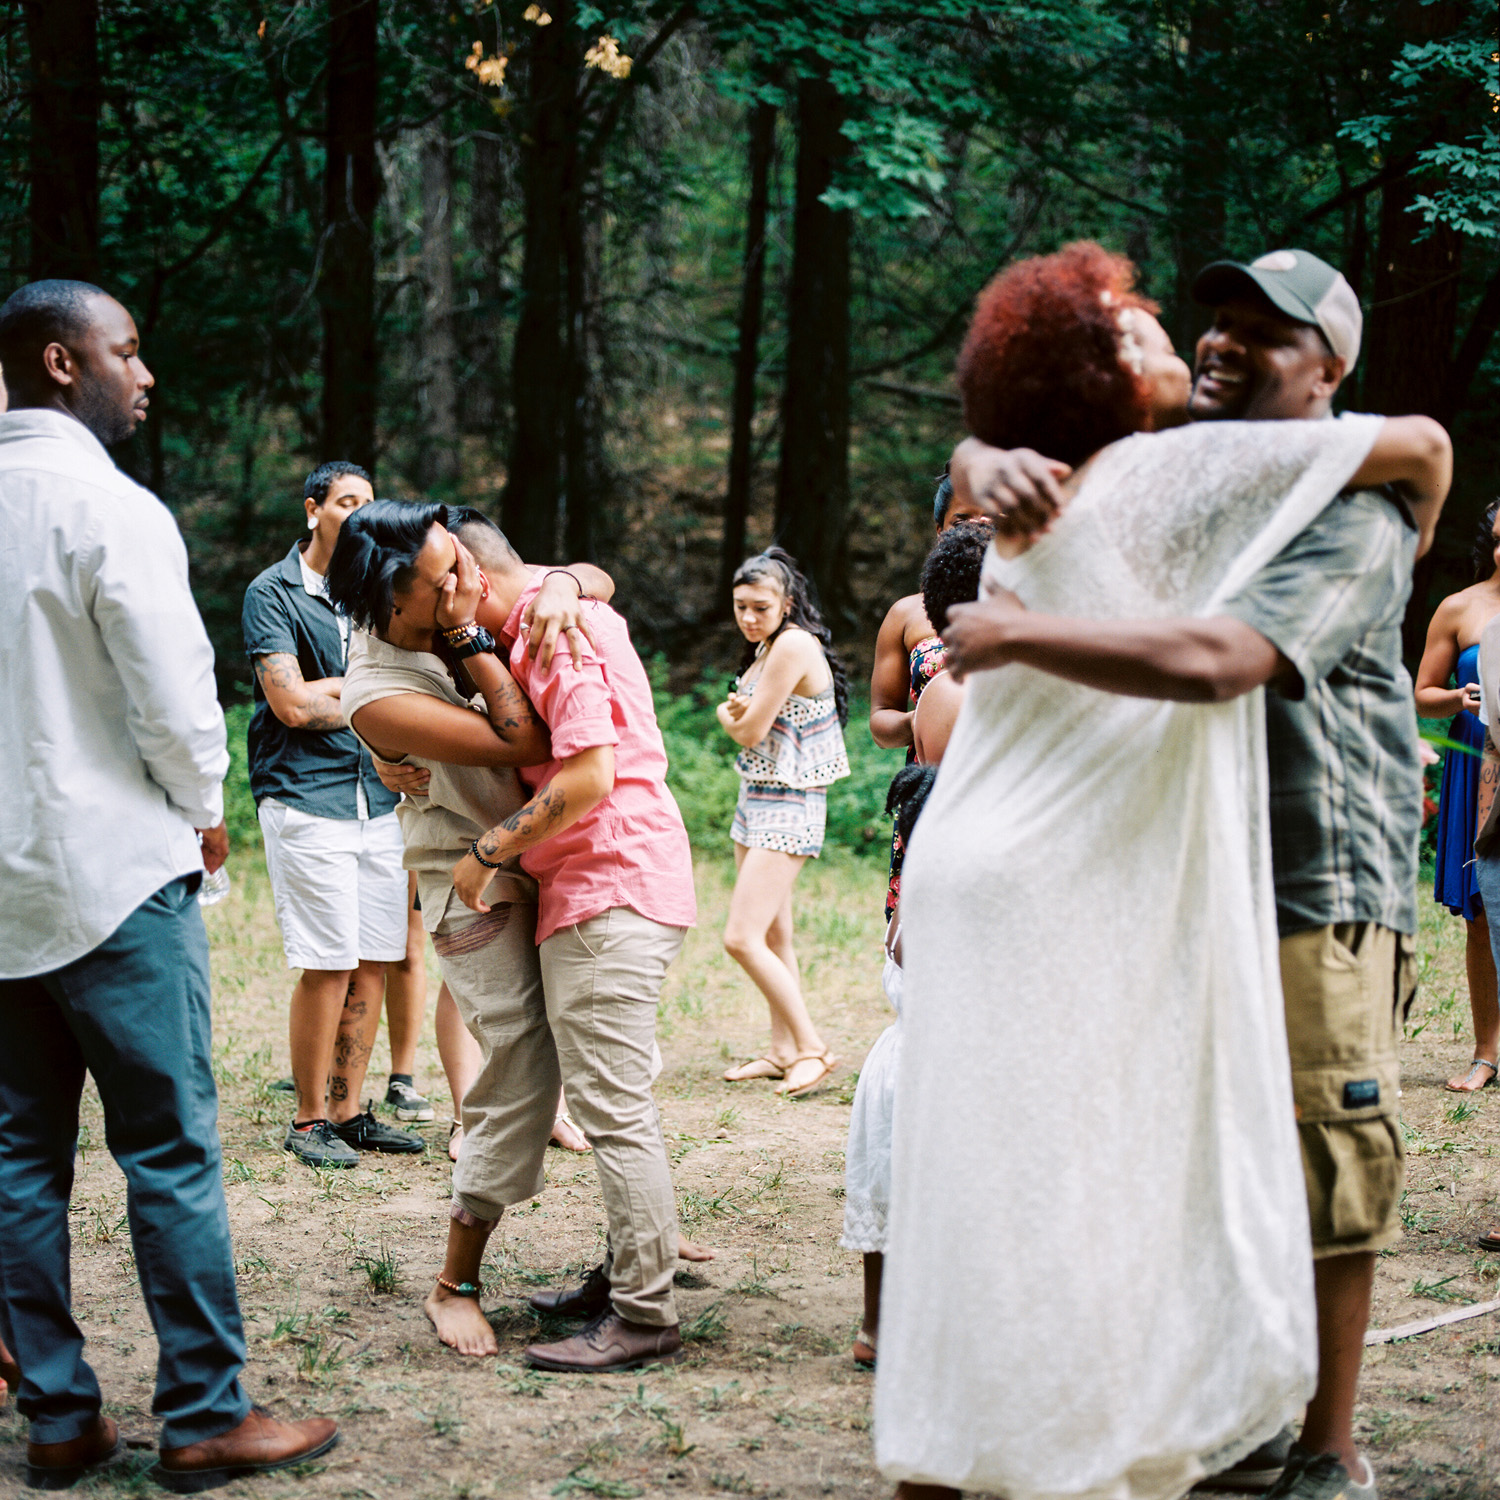 leavenworth campground boho wedding ceremony in the woods.jpg